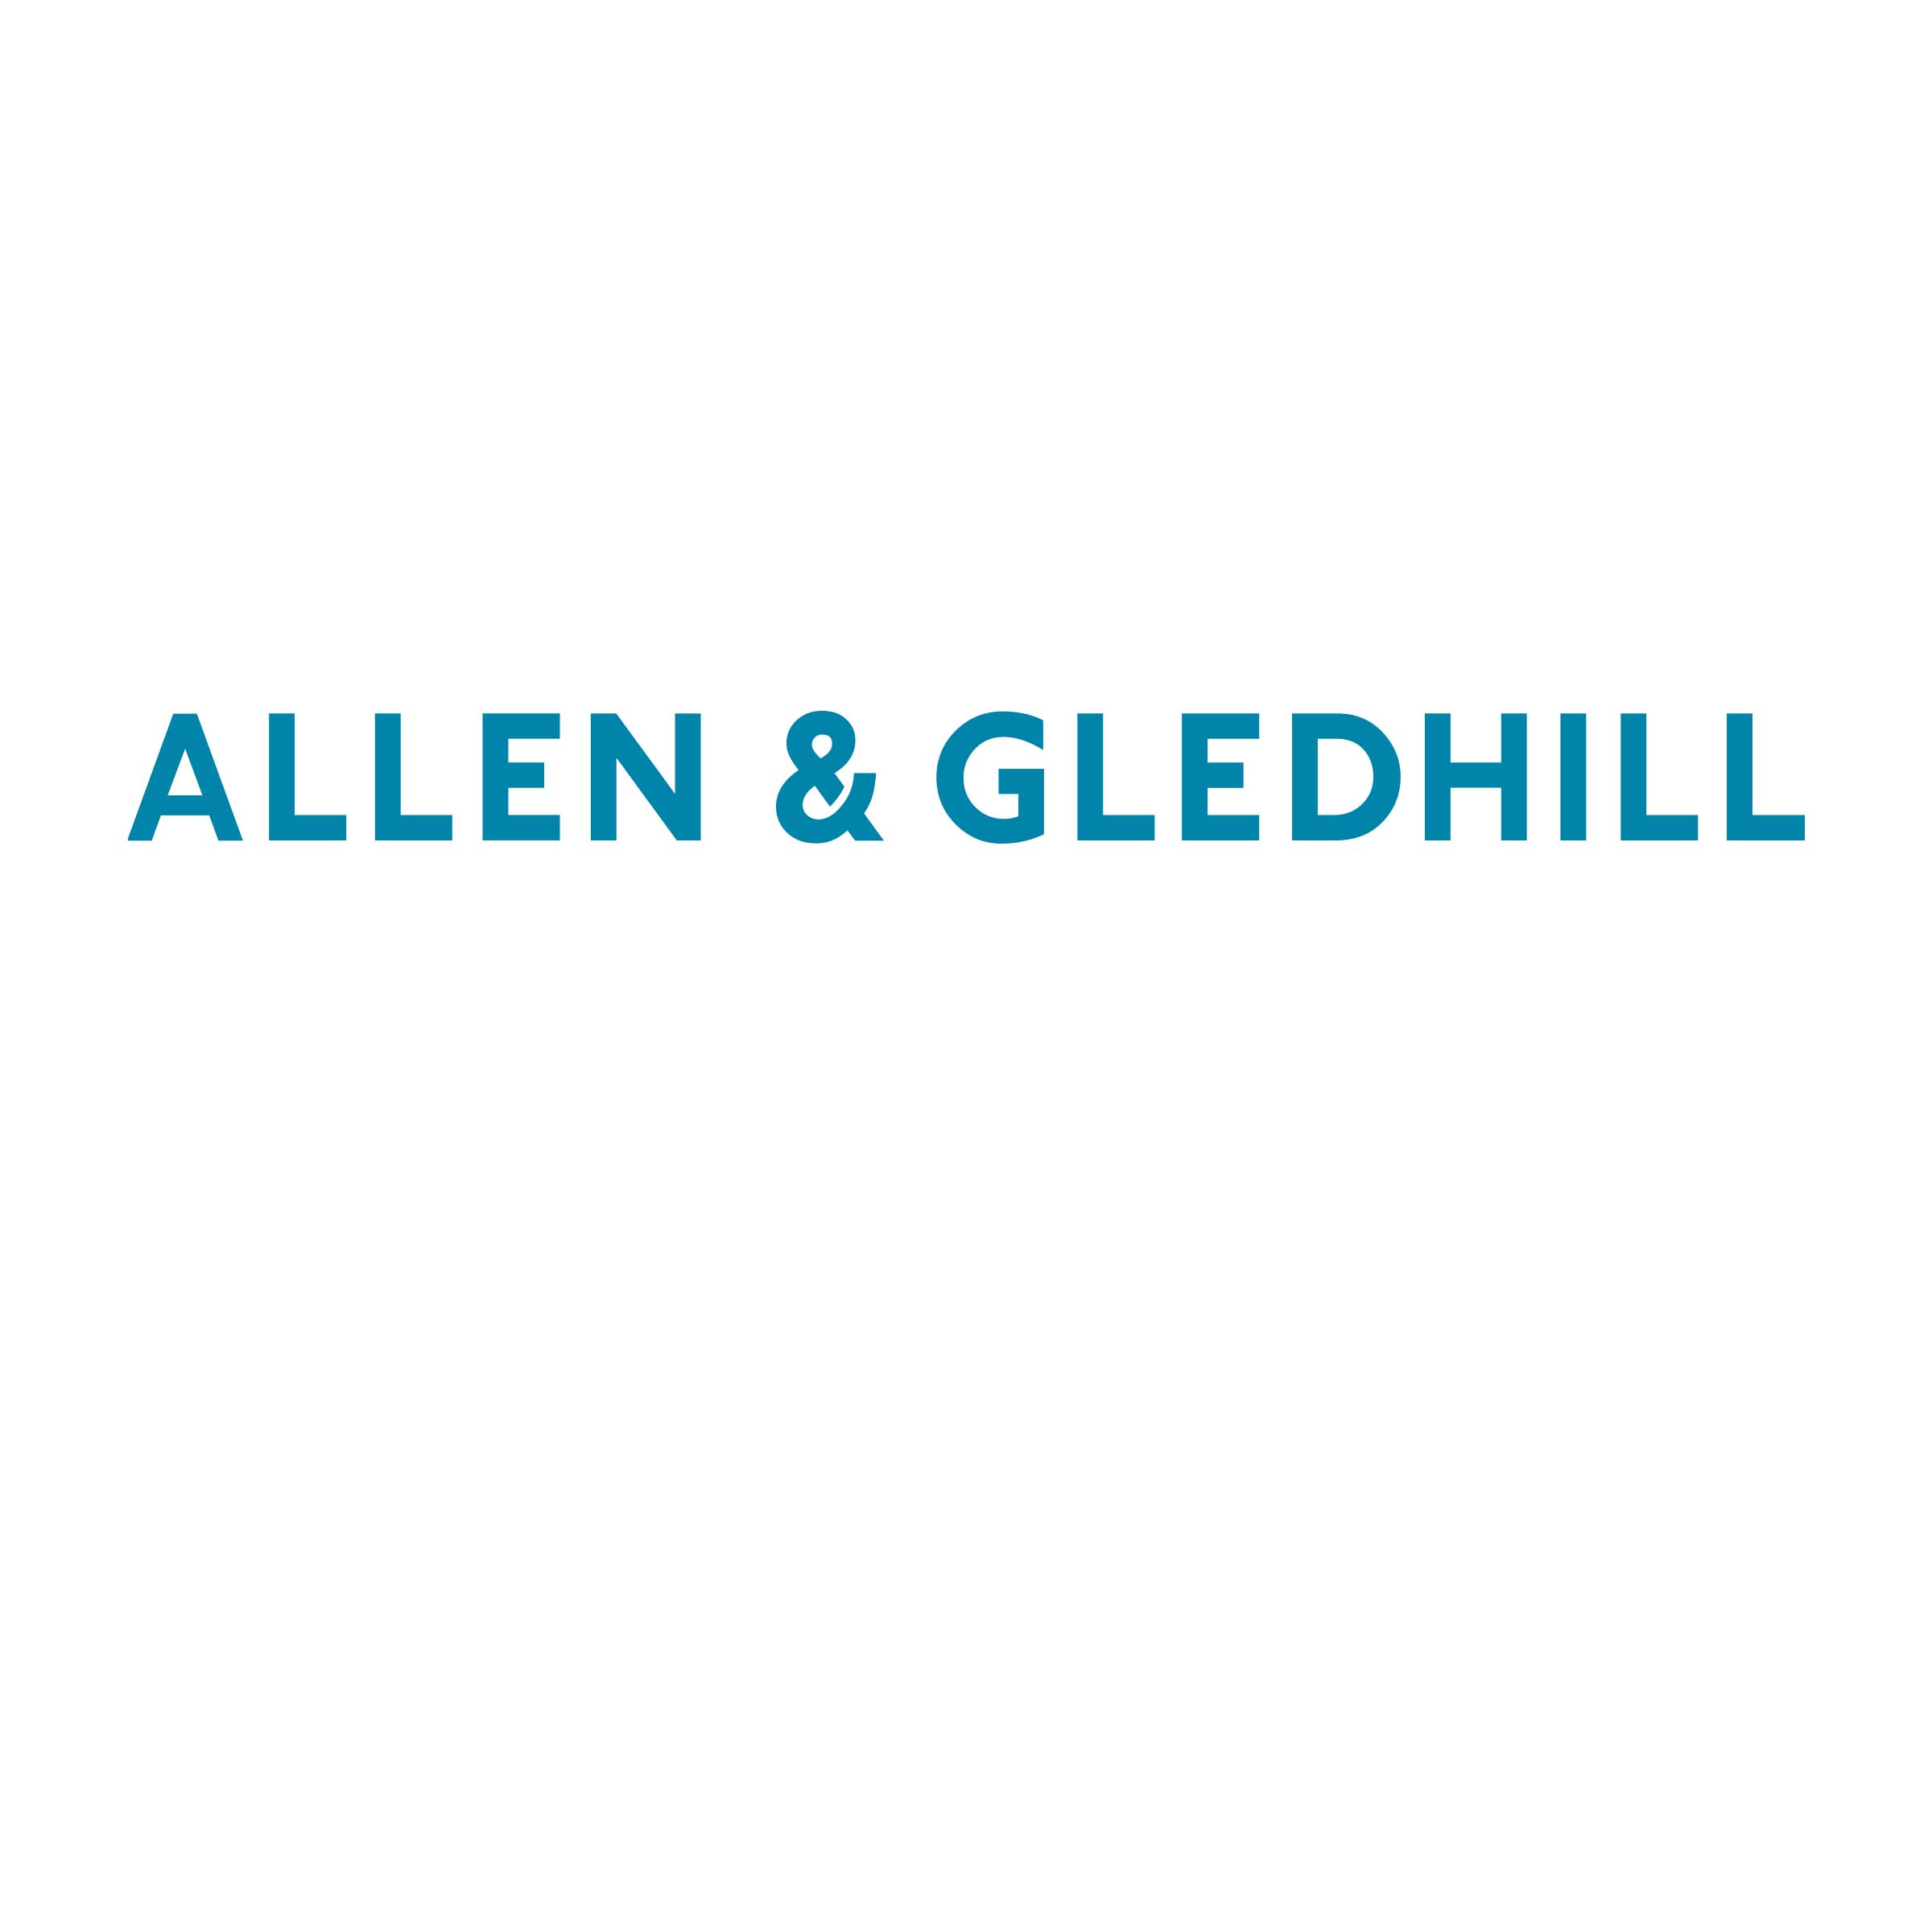 Allen & Gledhill logo